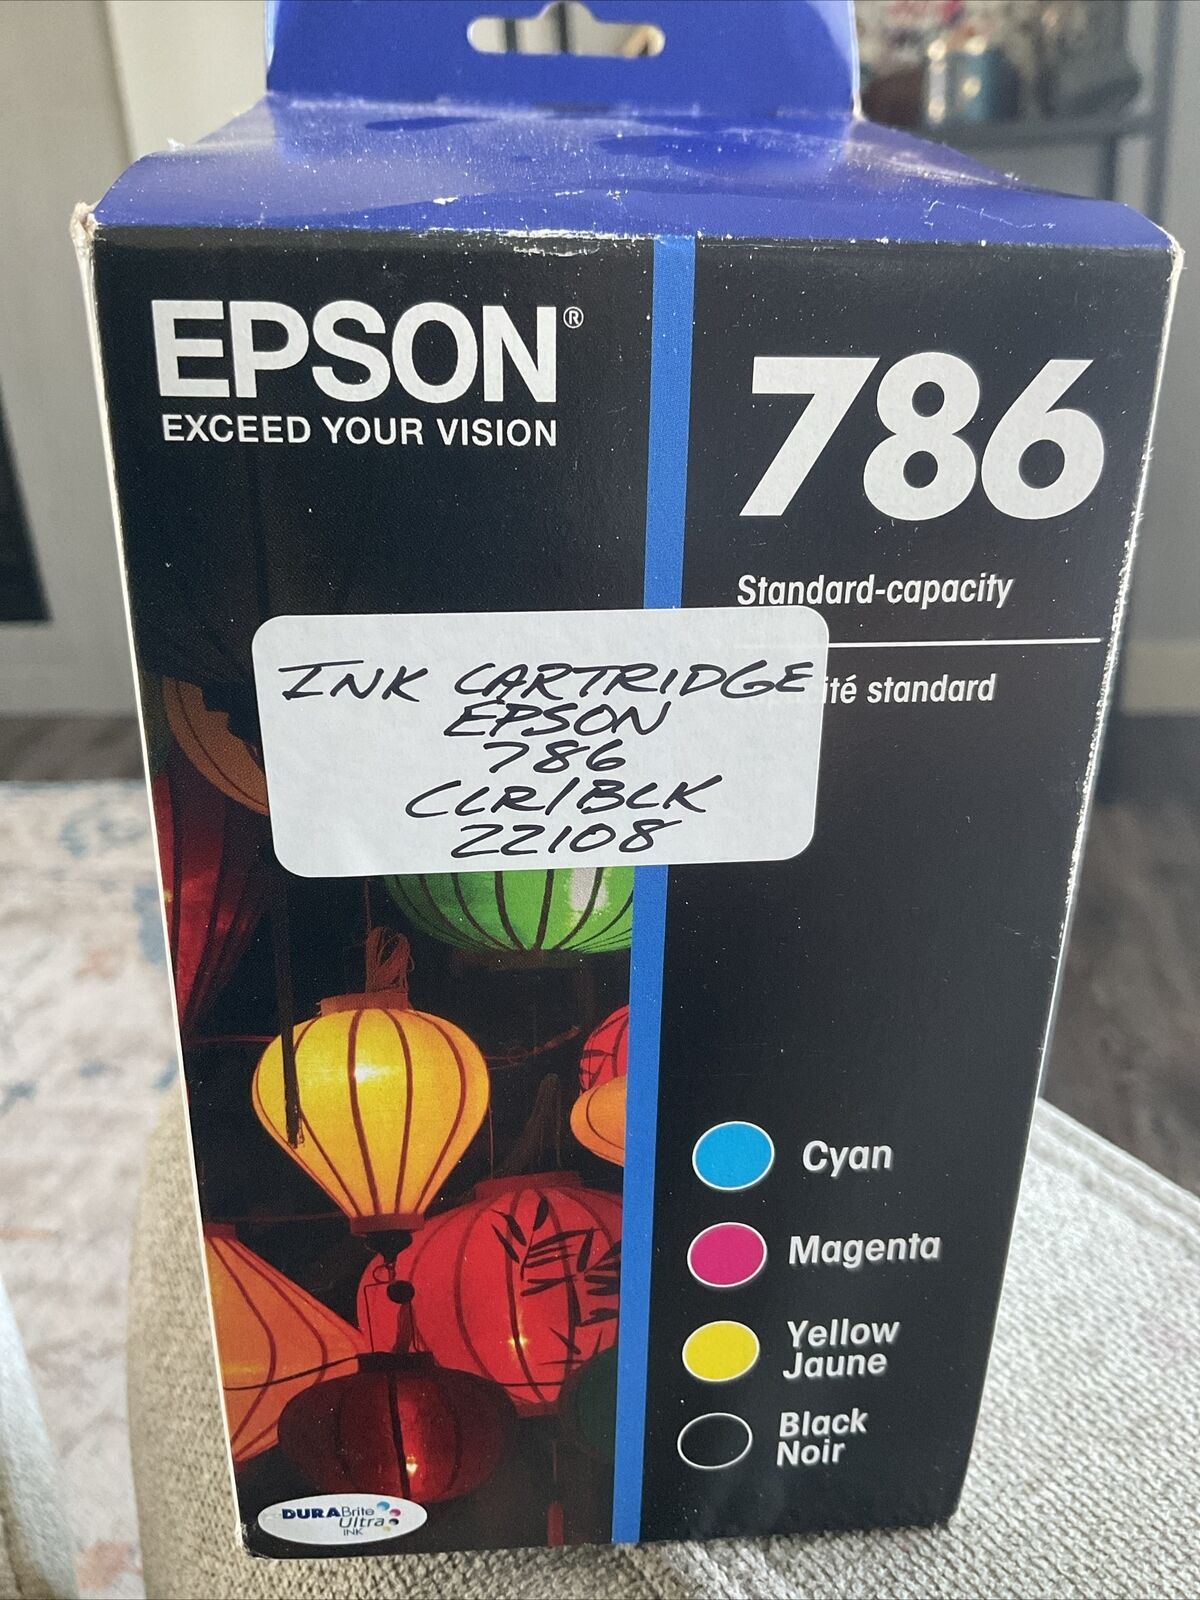 4PK Genuine Epson 786 Black & Standard 786 Color EXP 01/17 New Sealed